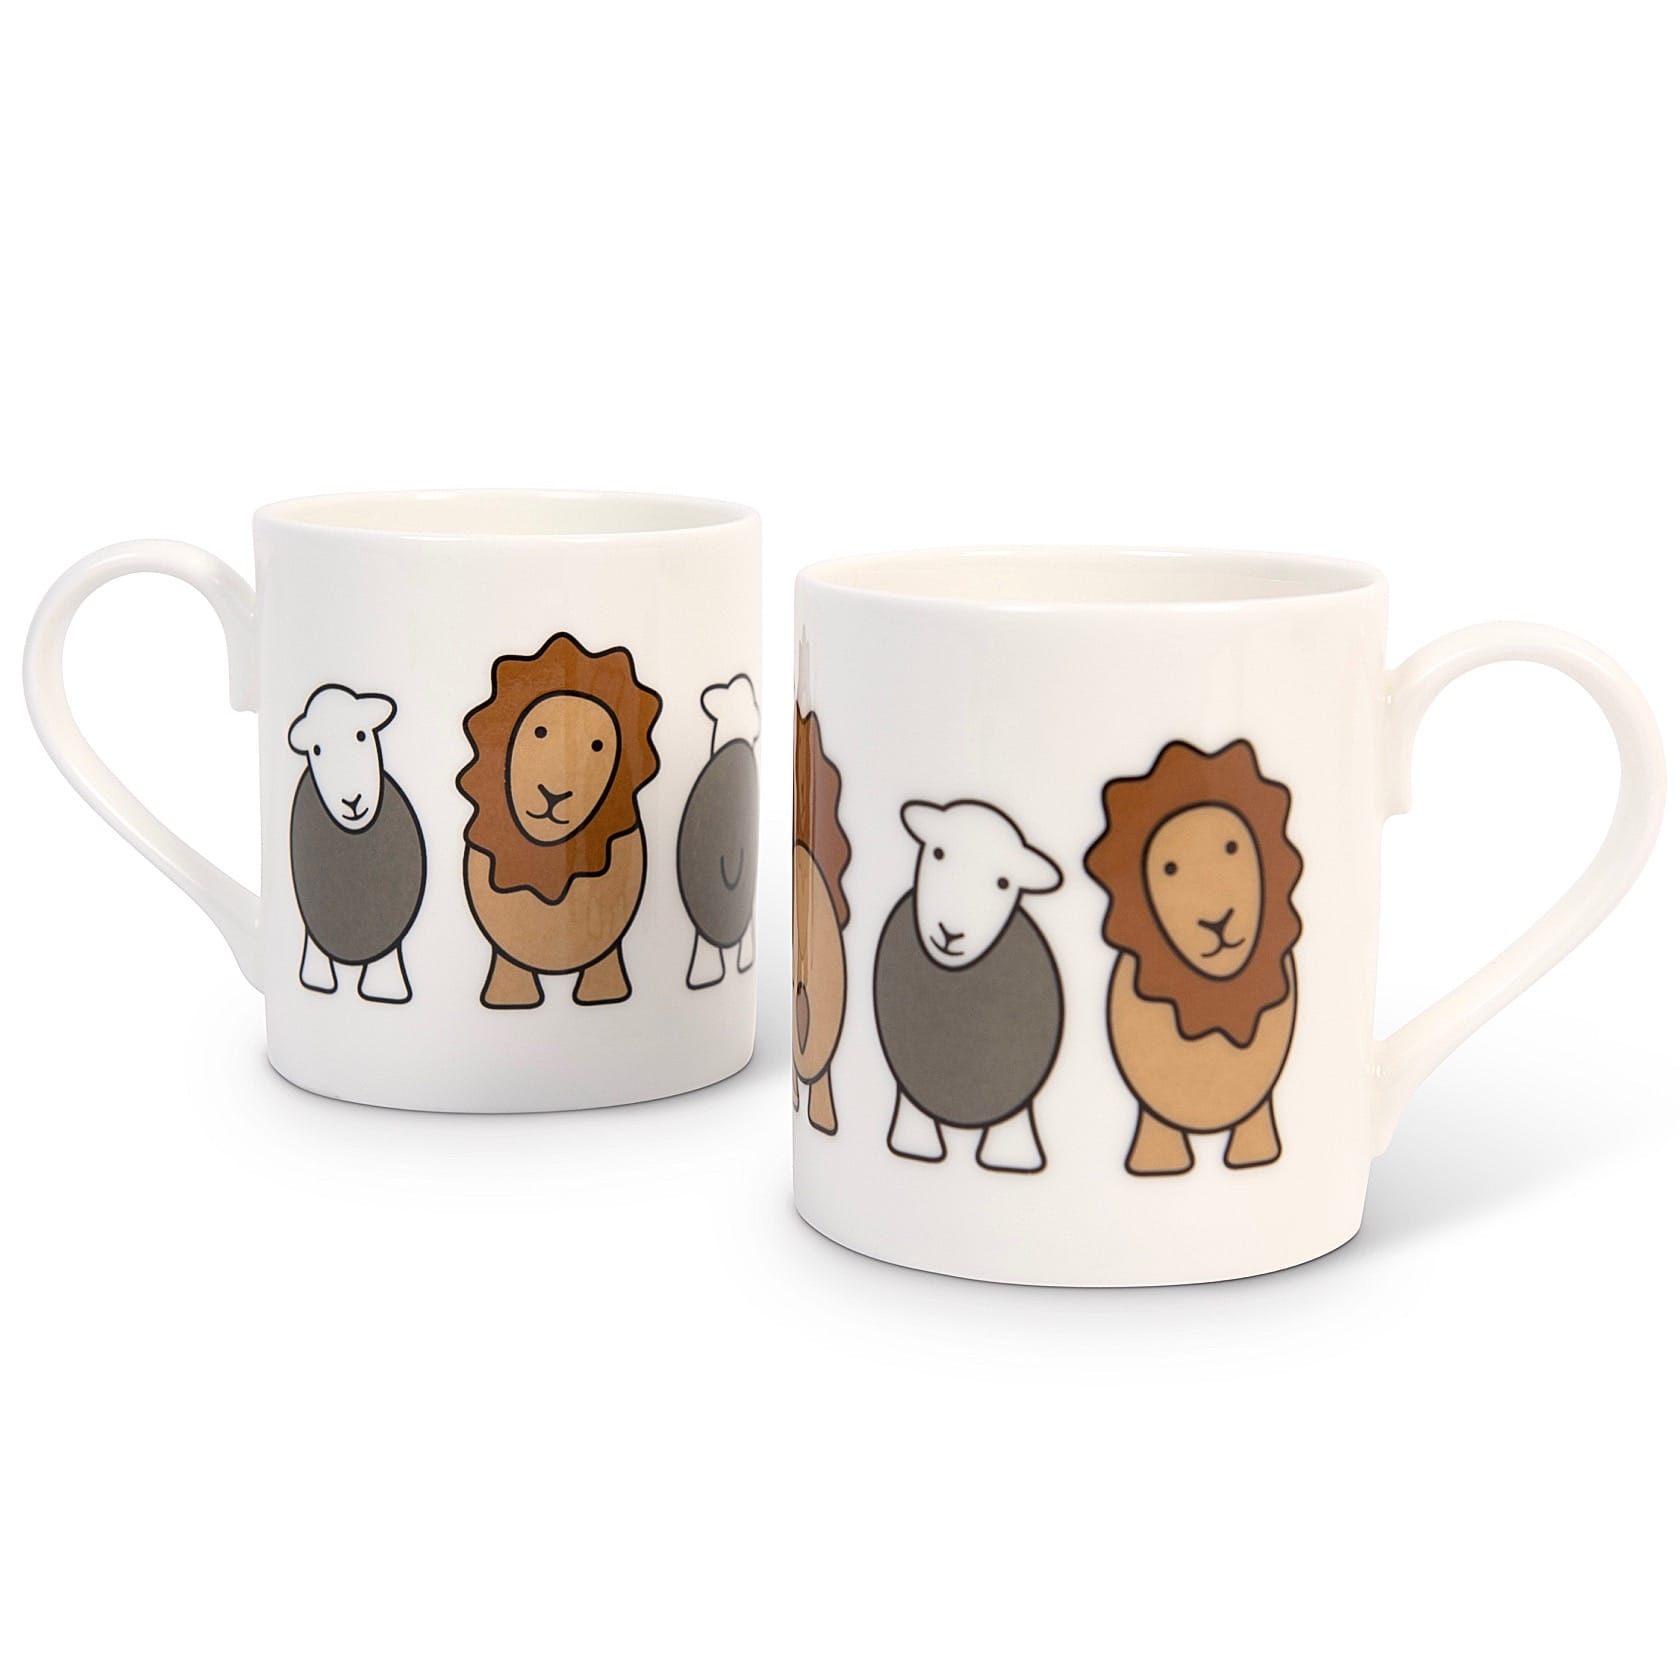 The Lion & the Lamb mug, by the Herdy Company, using English fine bone china